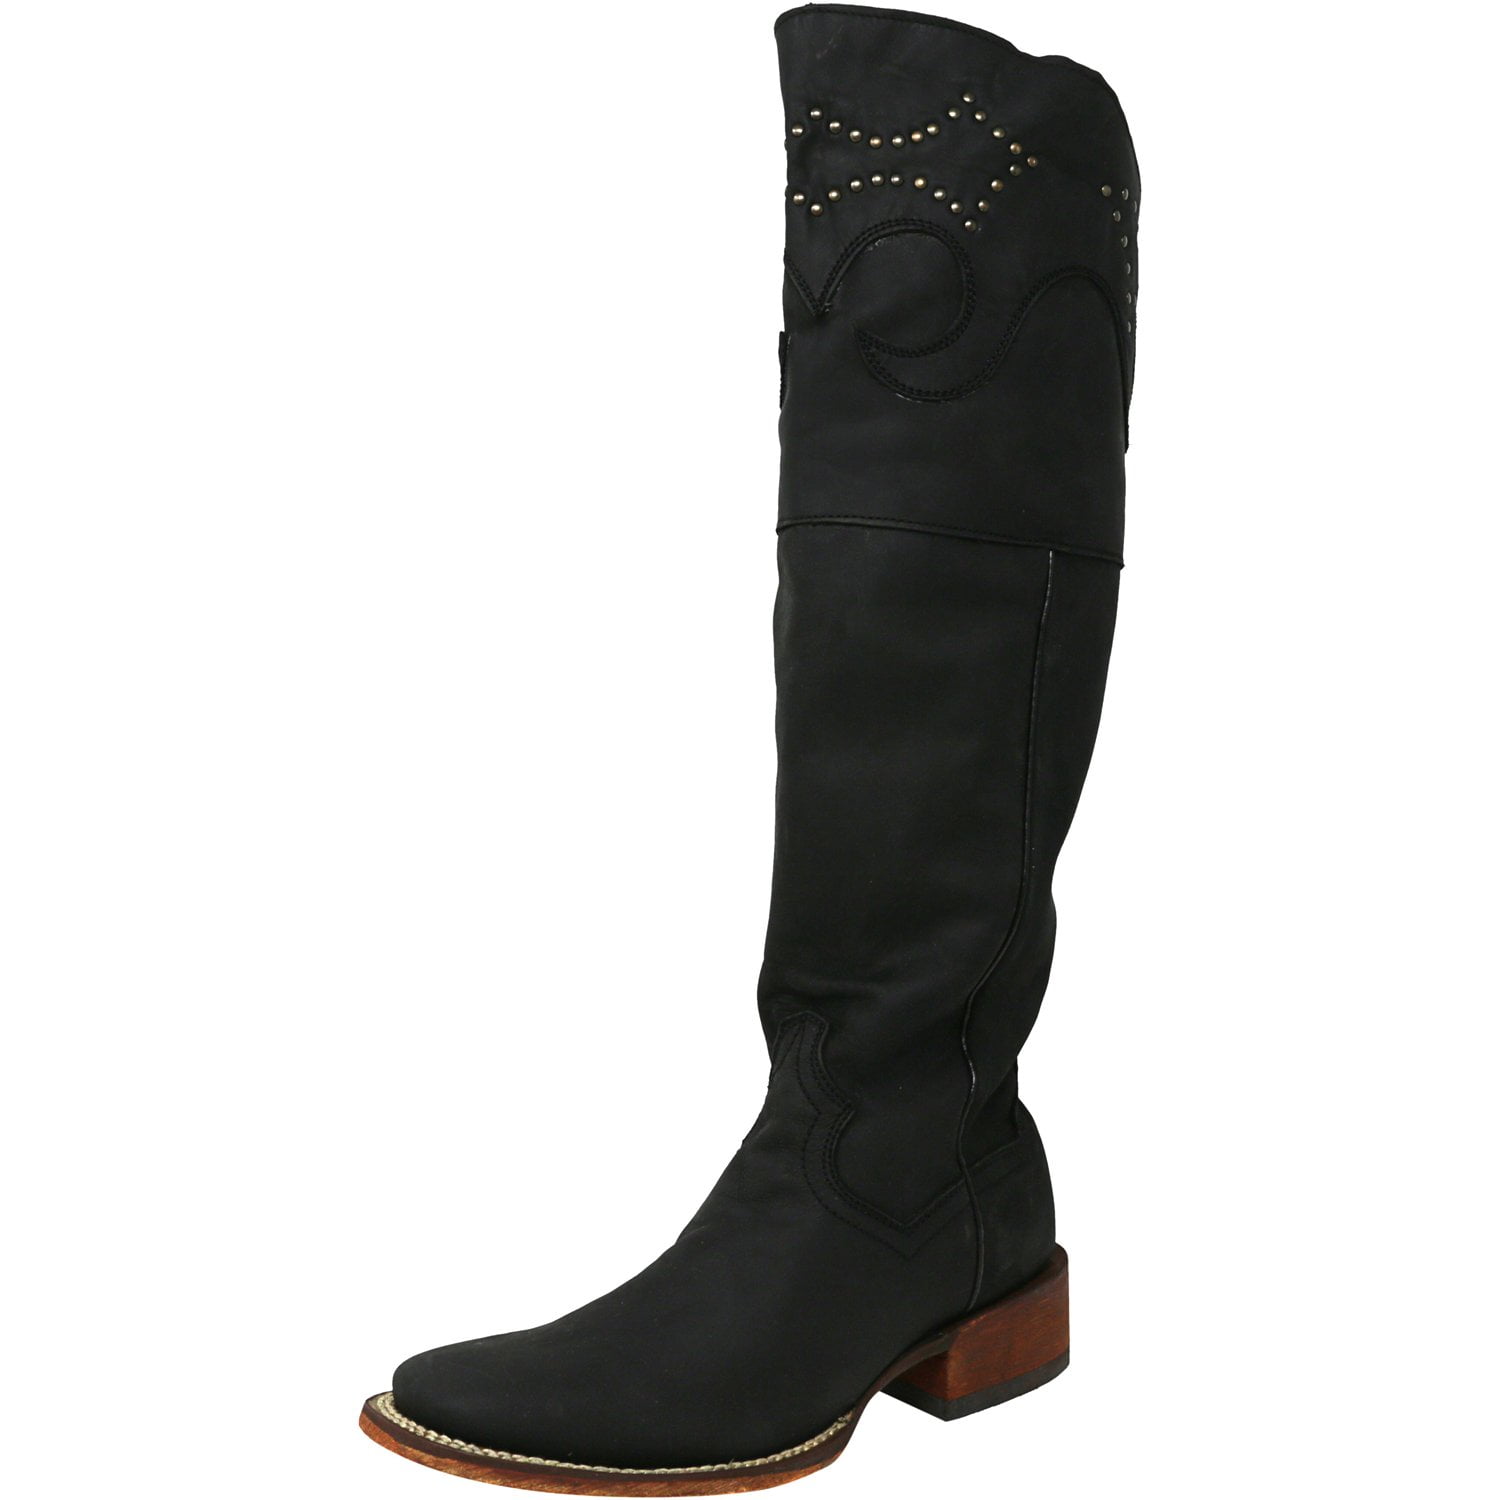 Dan Post Women's Misstaken Black Knee-High Leather Boot - 6.5M ...